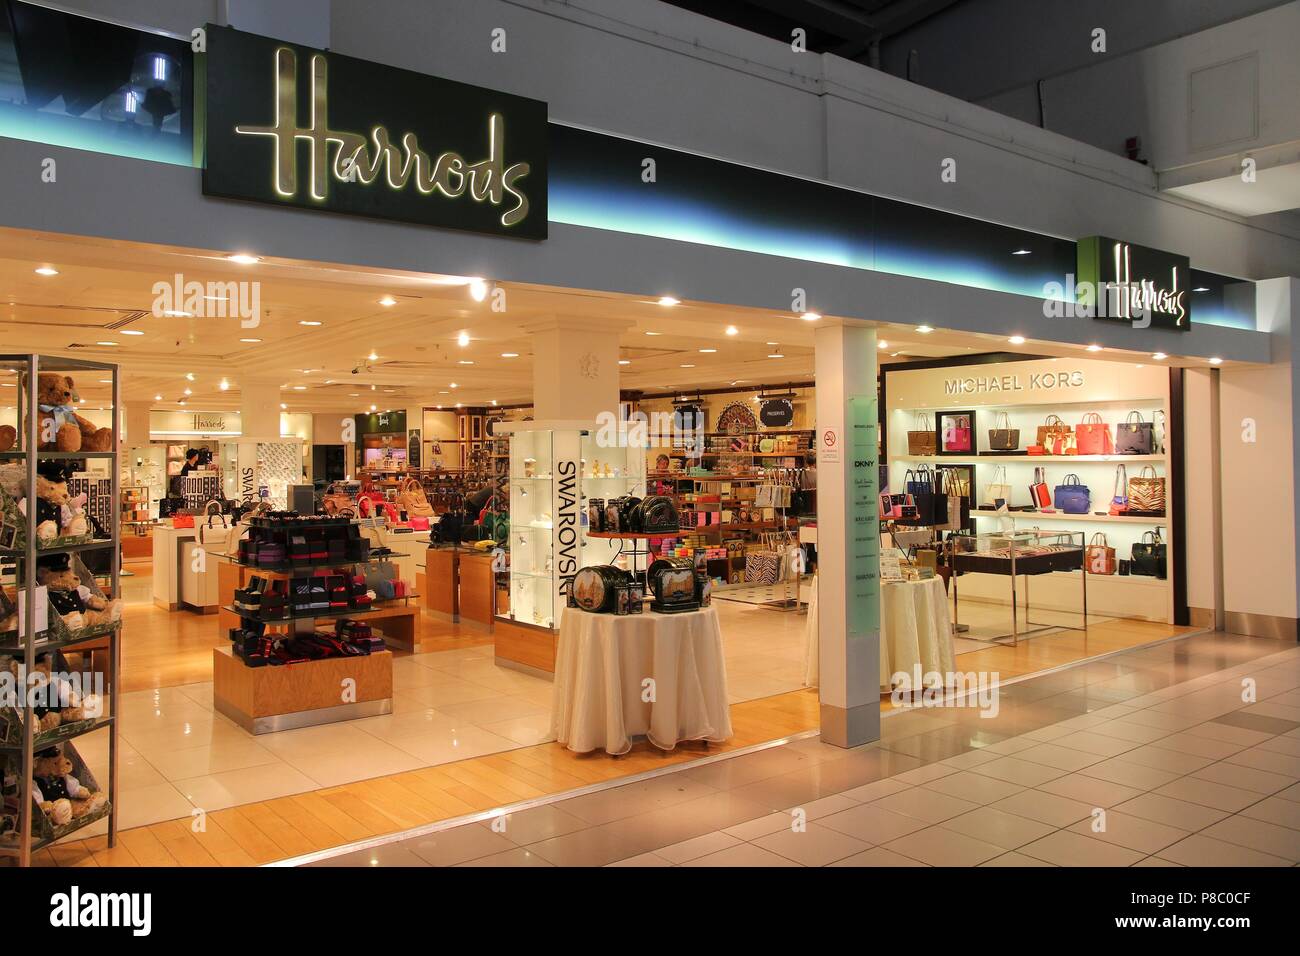 LONDON, UK - APRIL 16, 2014: Harrods store at London Heathrow Airport ...